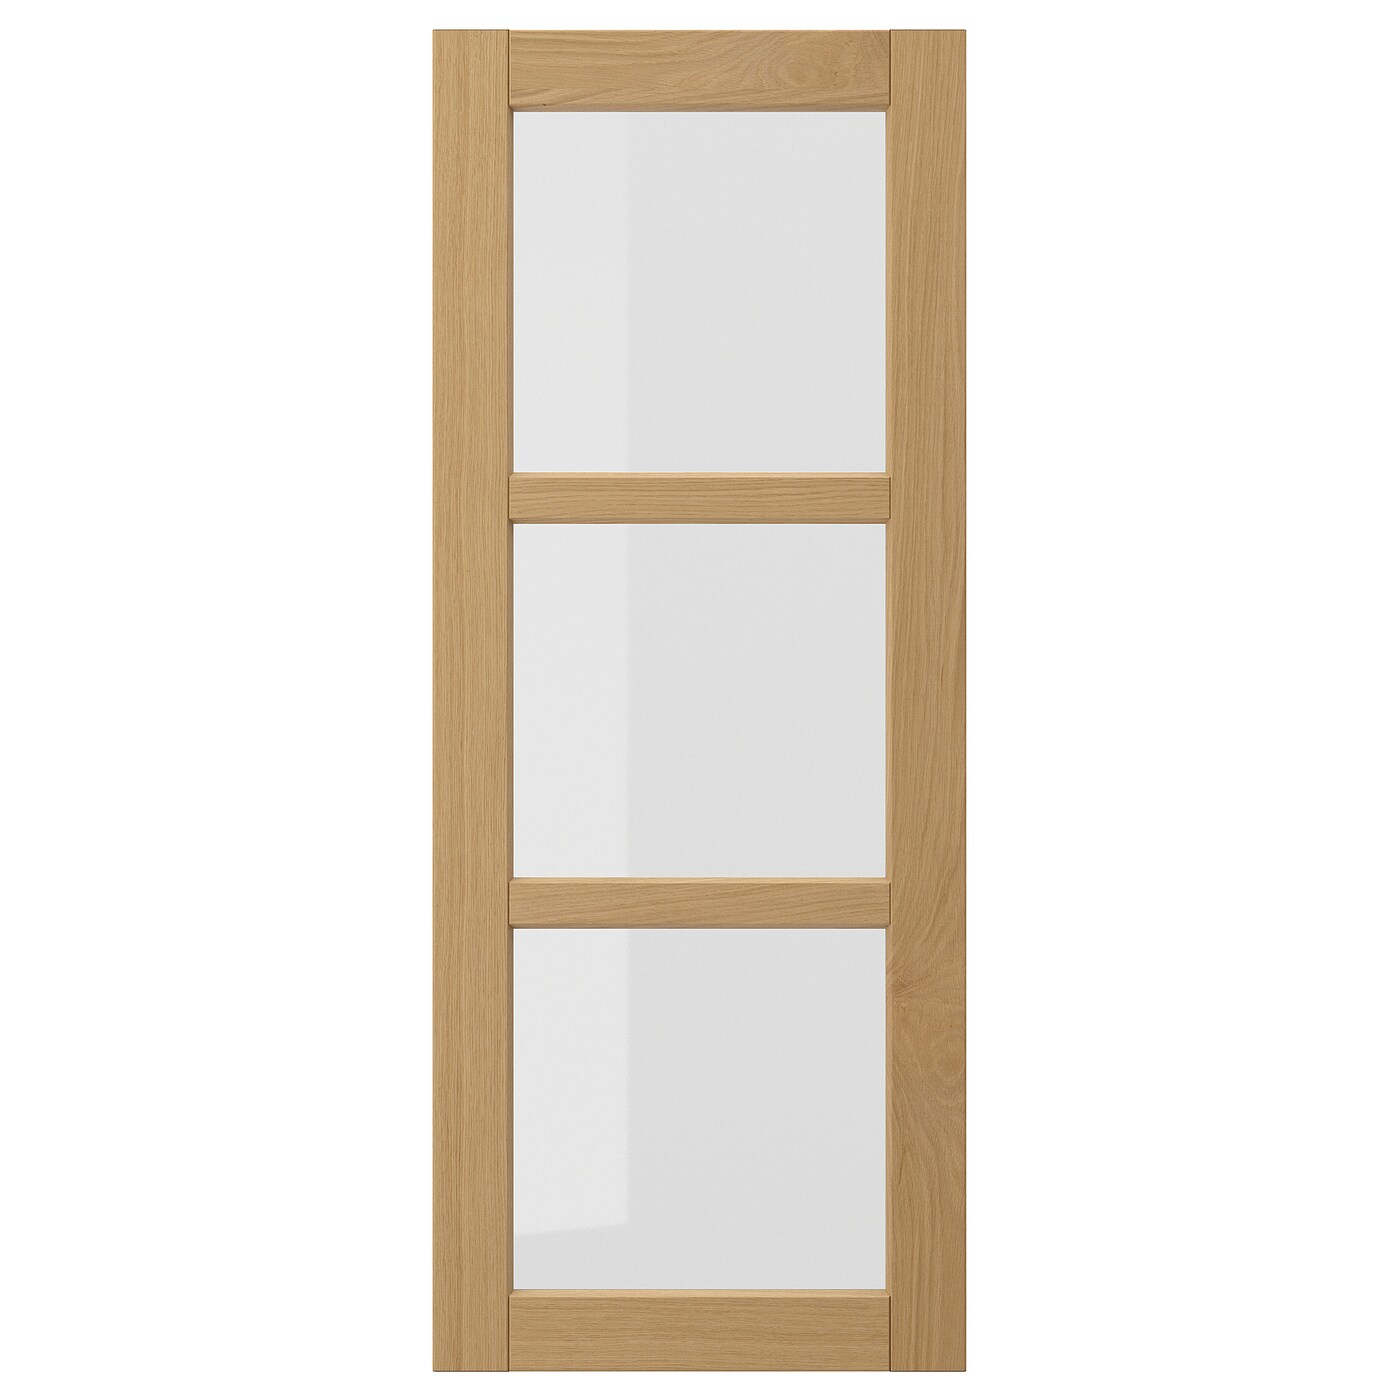 Стеклянная дверца - FORSBACKA IKEA/ ФОРСБАКА ИКЕА,  100х40 см, под беленый дуб